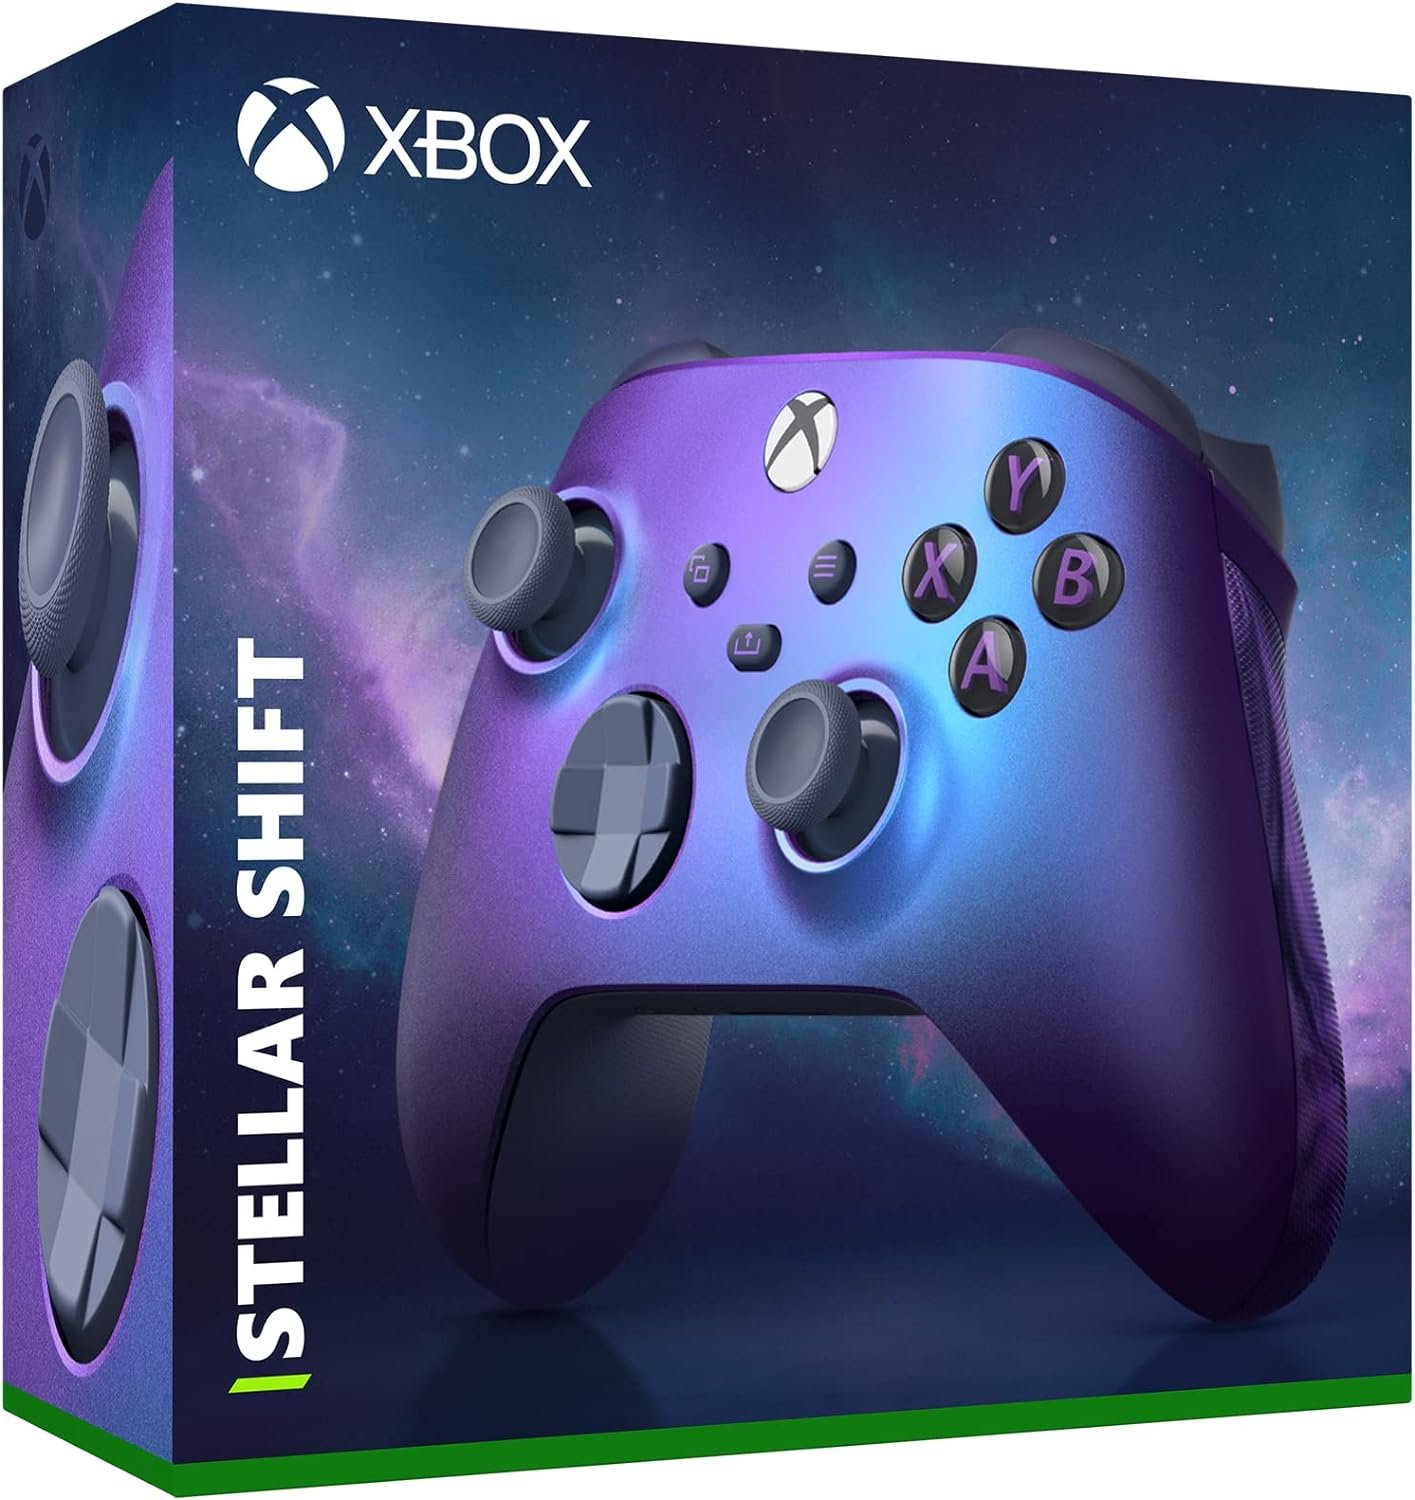 S, Xbox One, and Windows Devices â€“ Stellar Shift Special Edition...(QAU-00086)